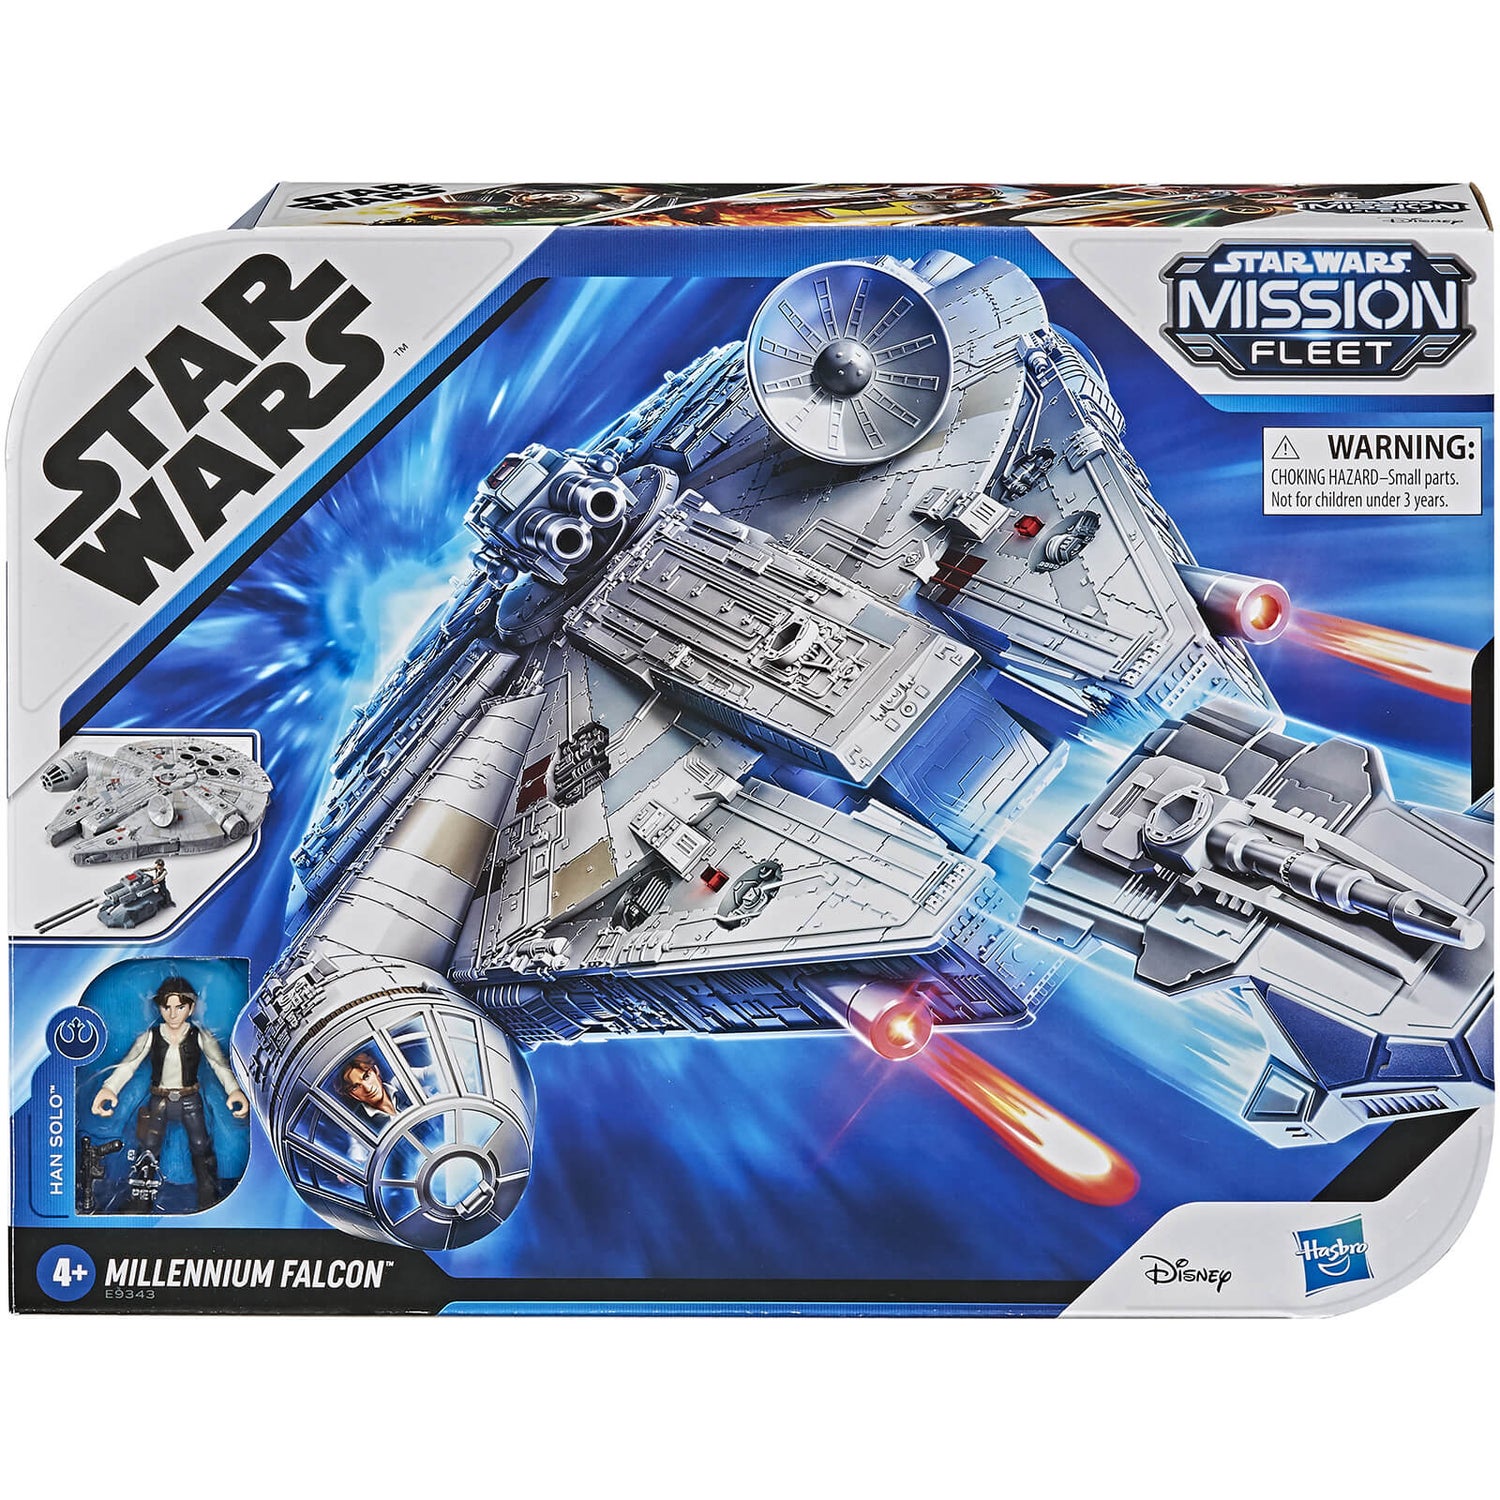 Hasbro Star Wars Mission Fleet Millennium Falcon Action Figure